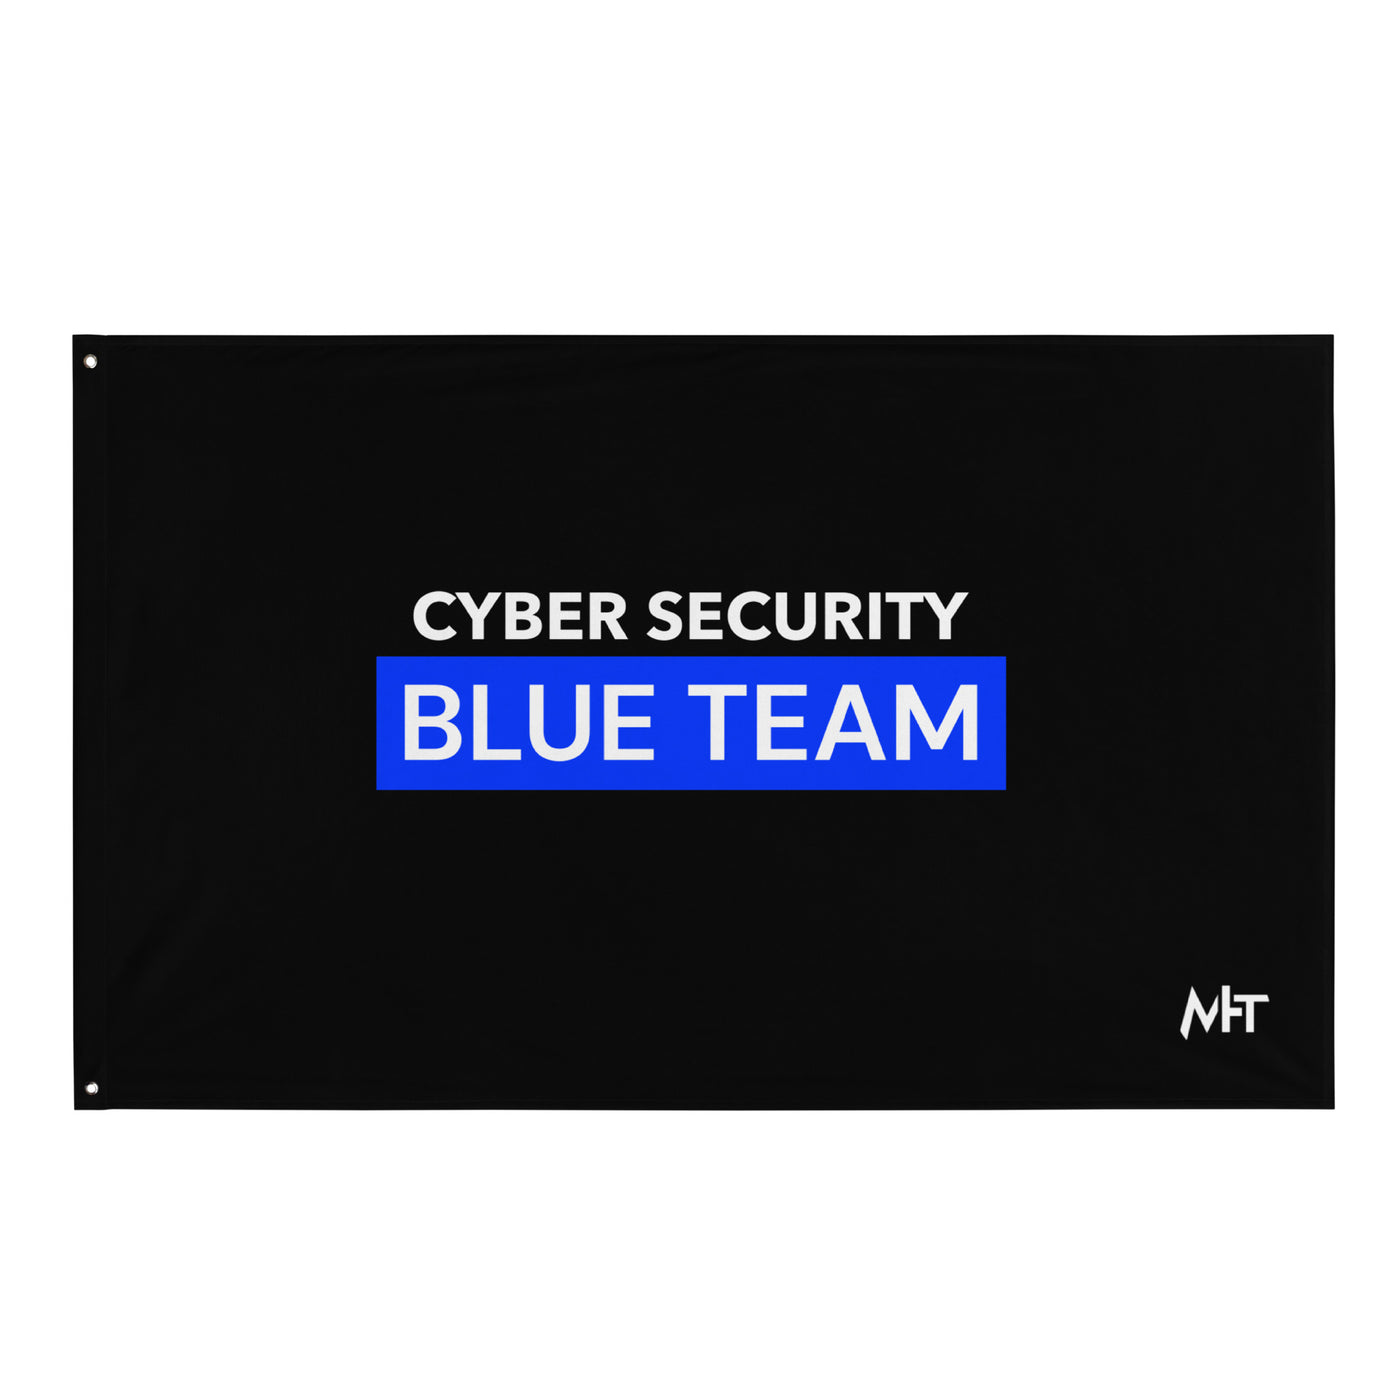 Cyber Security Blue Team V7 - Flag